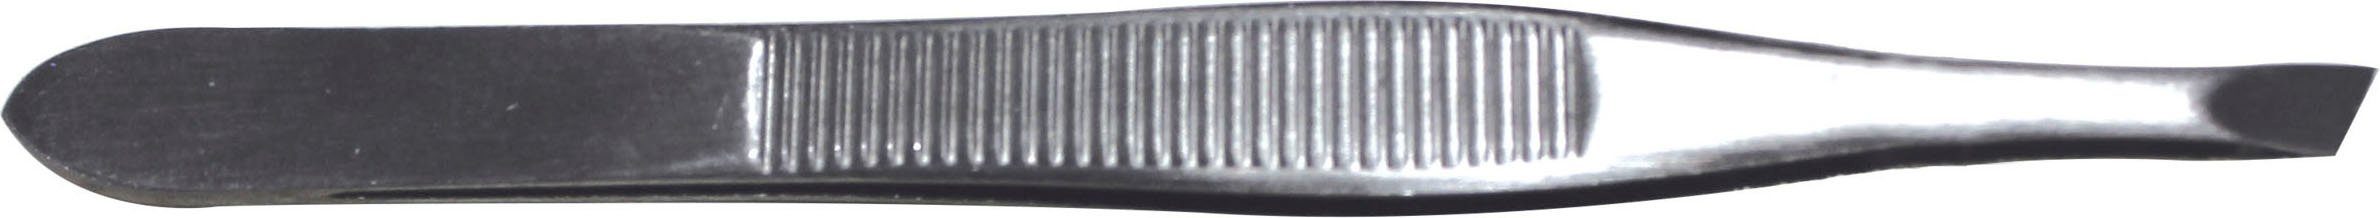 NE3455, Remington antimikrobielles Gehäuse Beauty-Trimmer Nano-Silber